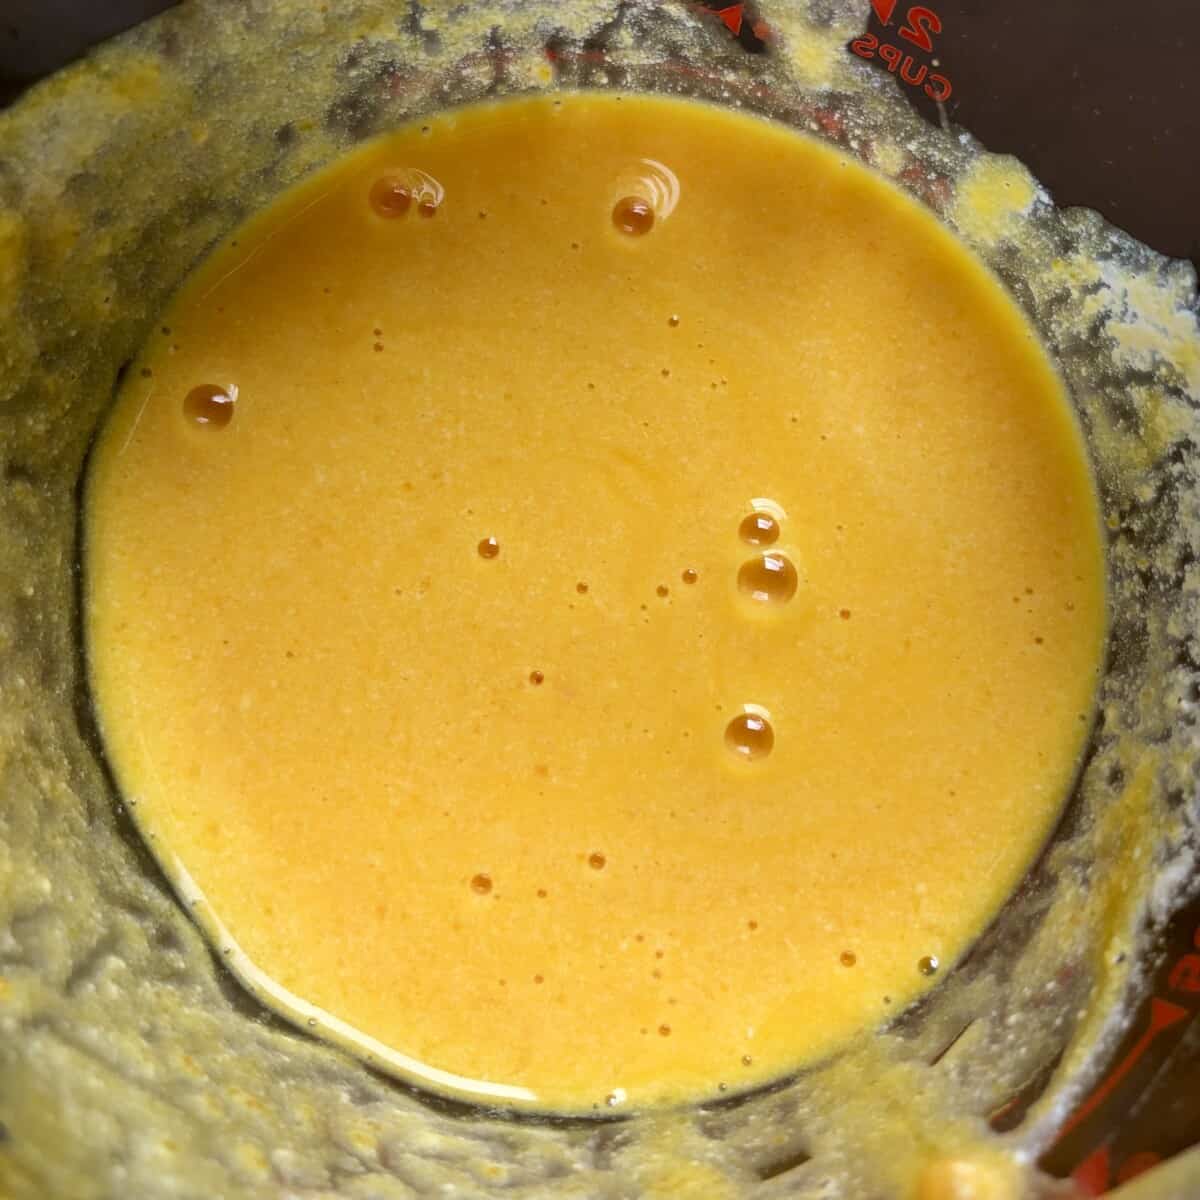 beautifully orange-ish colored pumpkin pancake batter